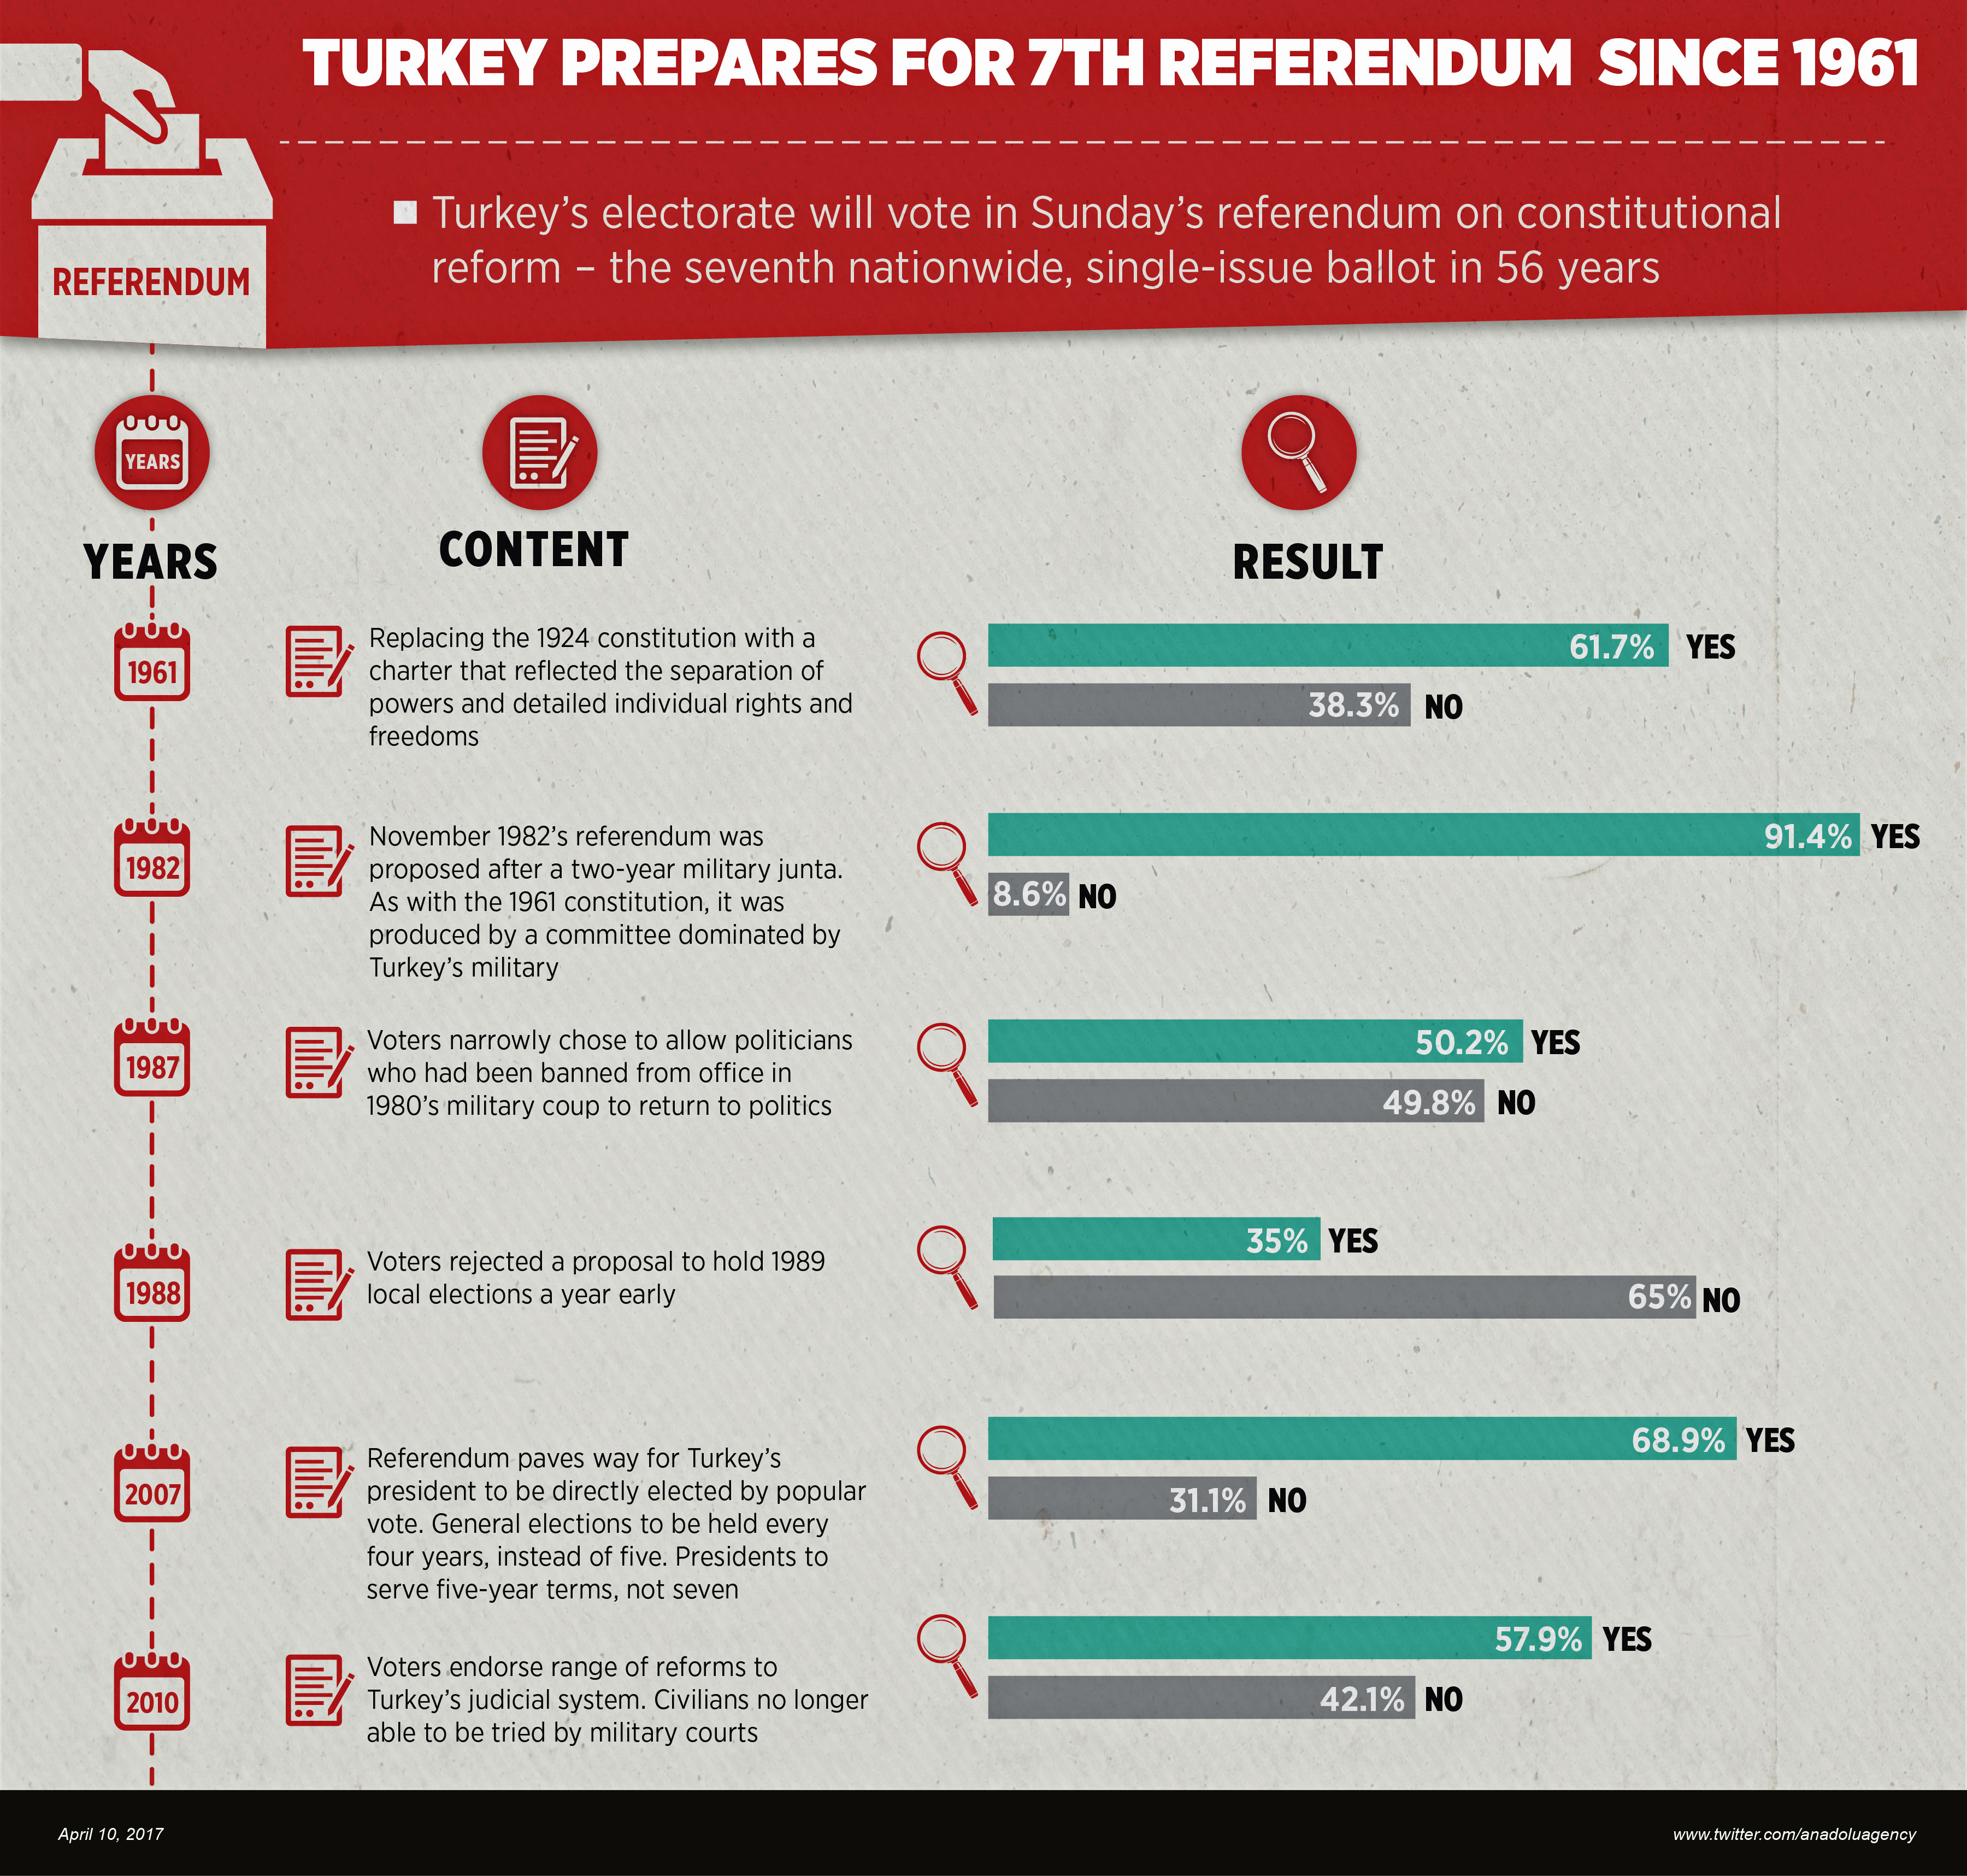 Turkey prepares for 7th referendum since 1961